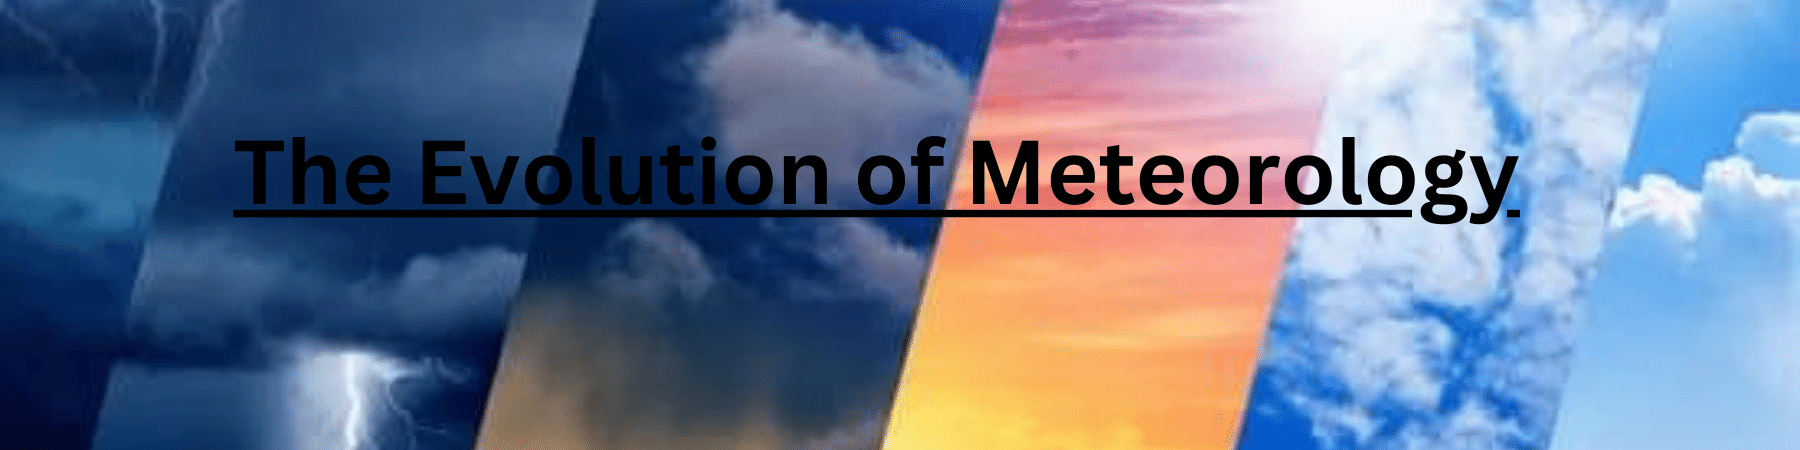 The Evolution of Meteorology